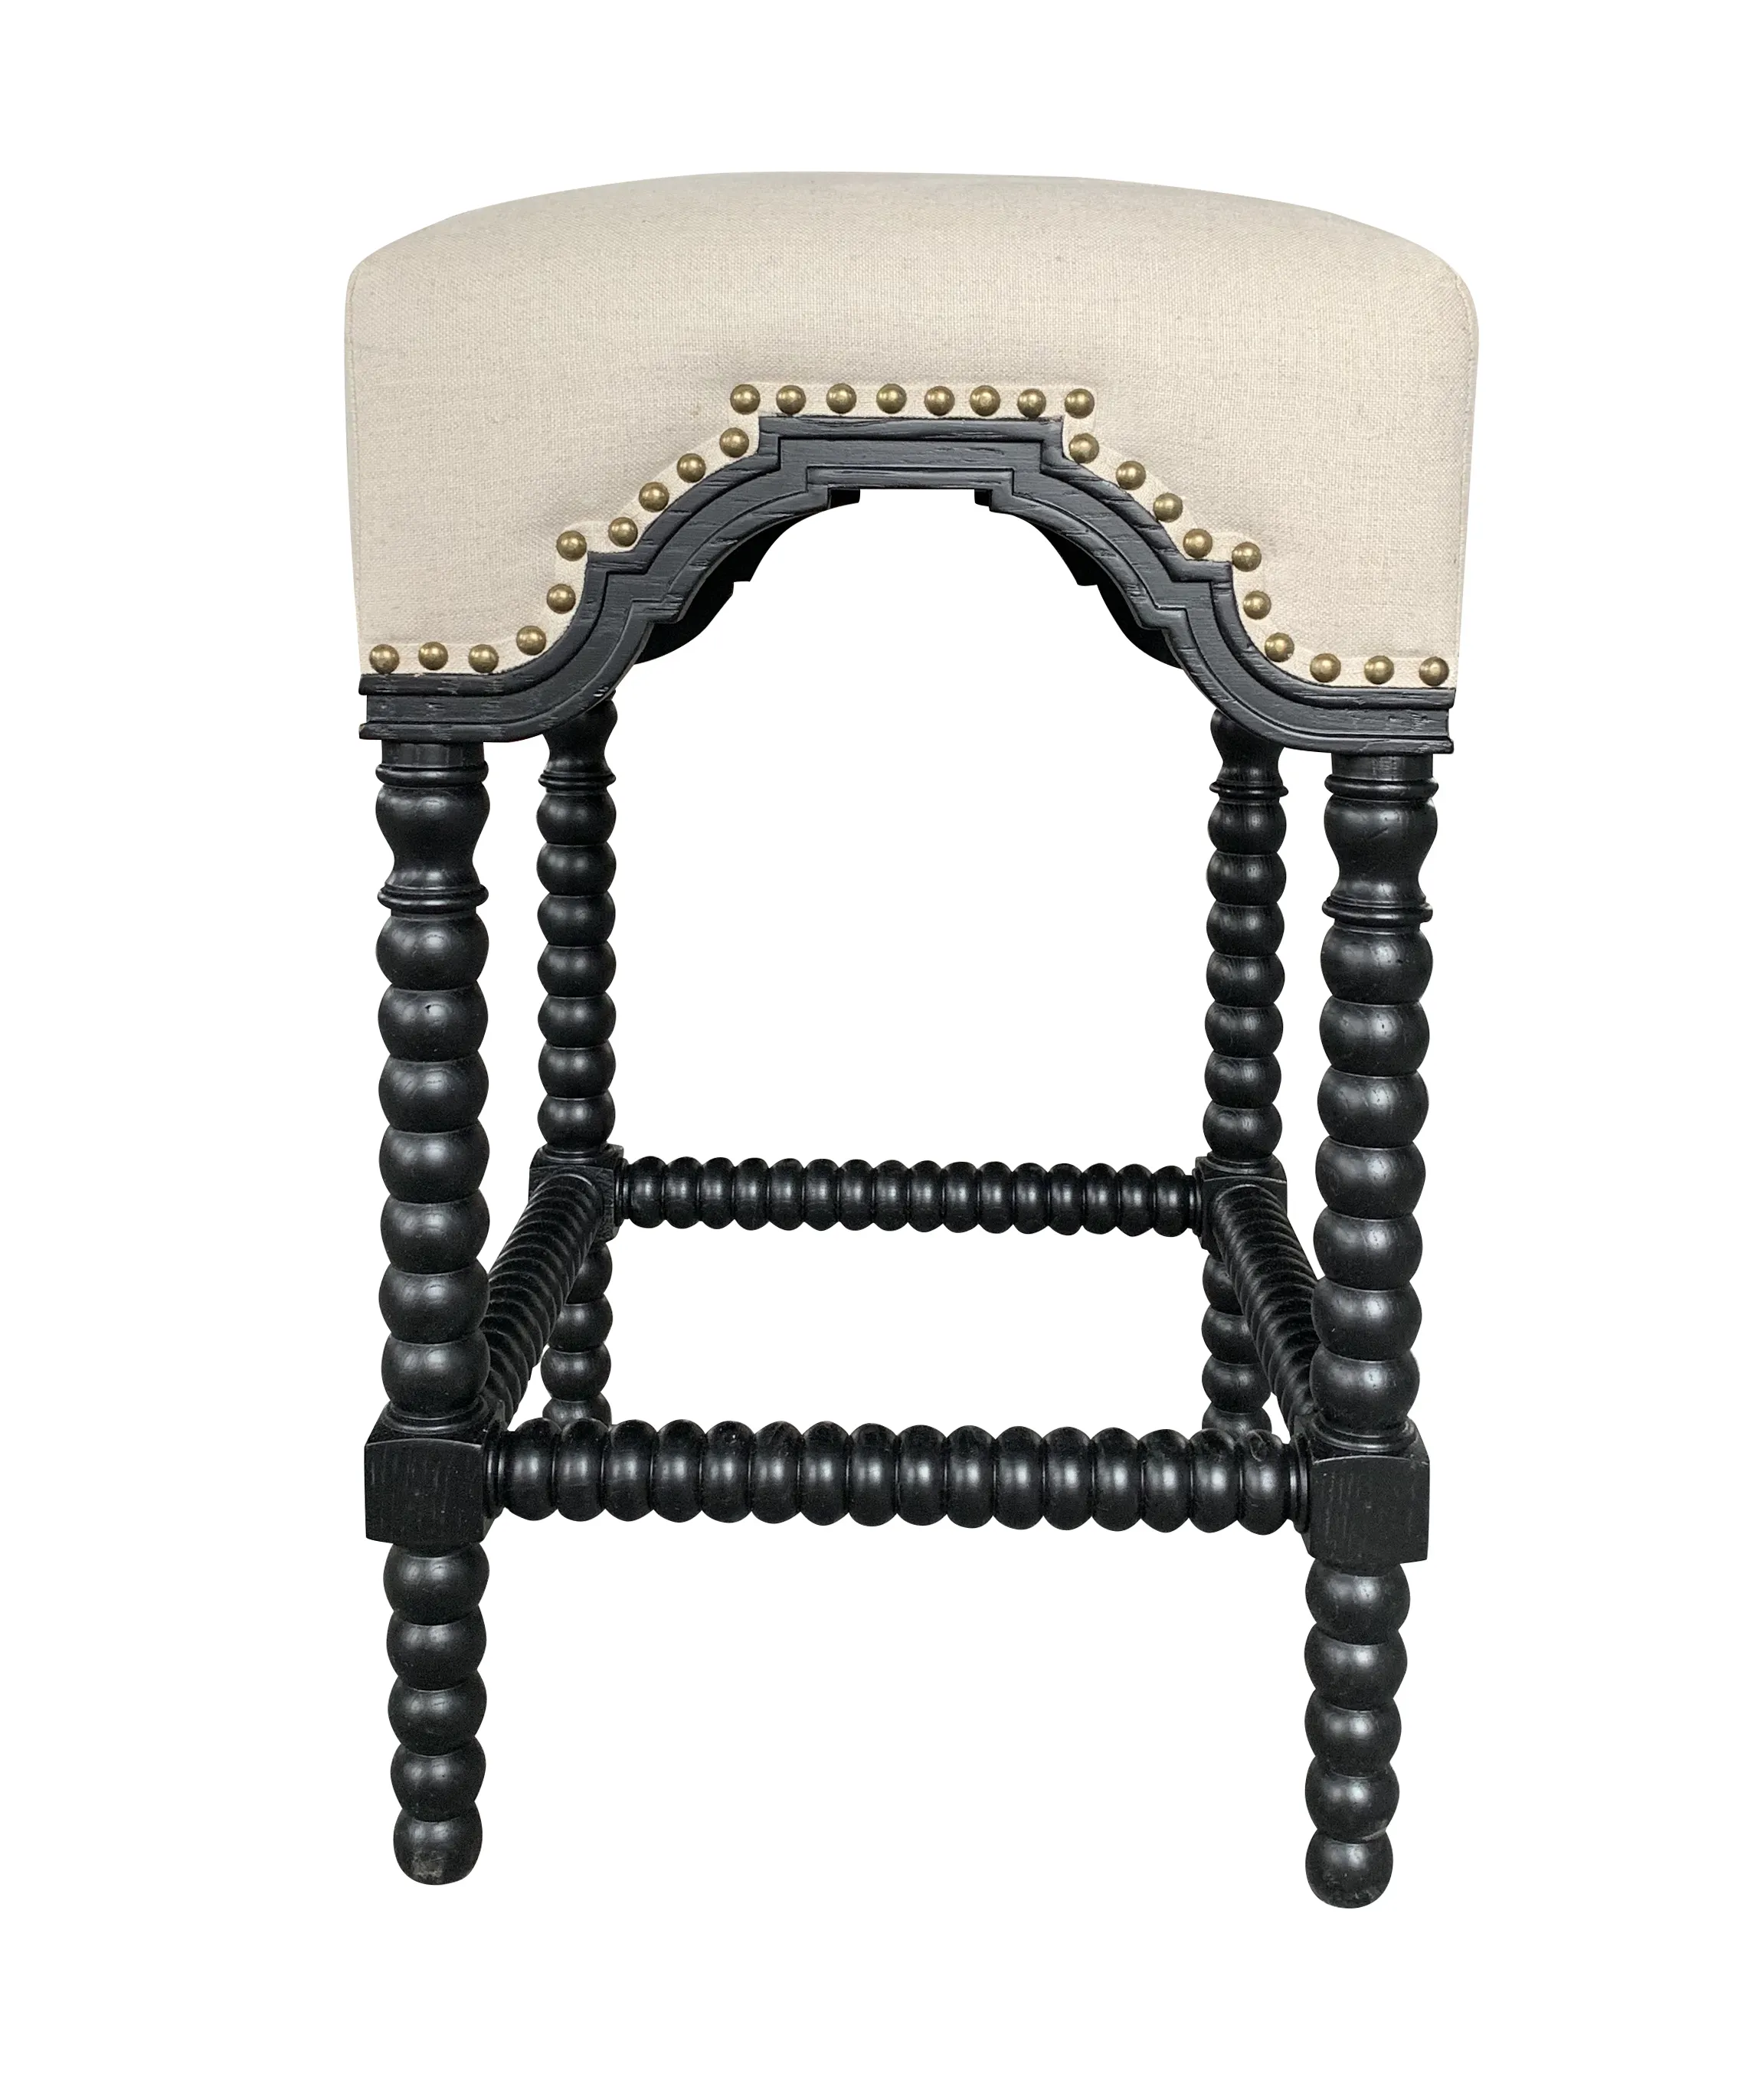 HL592W Noir abacus антикварный деревянный барный стул со стойкой стул кухонный стул